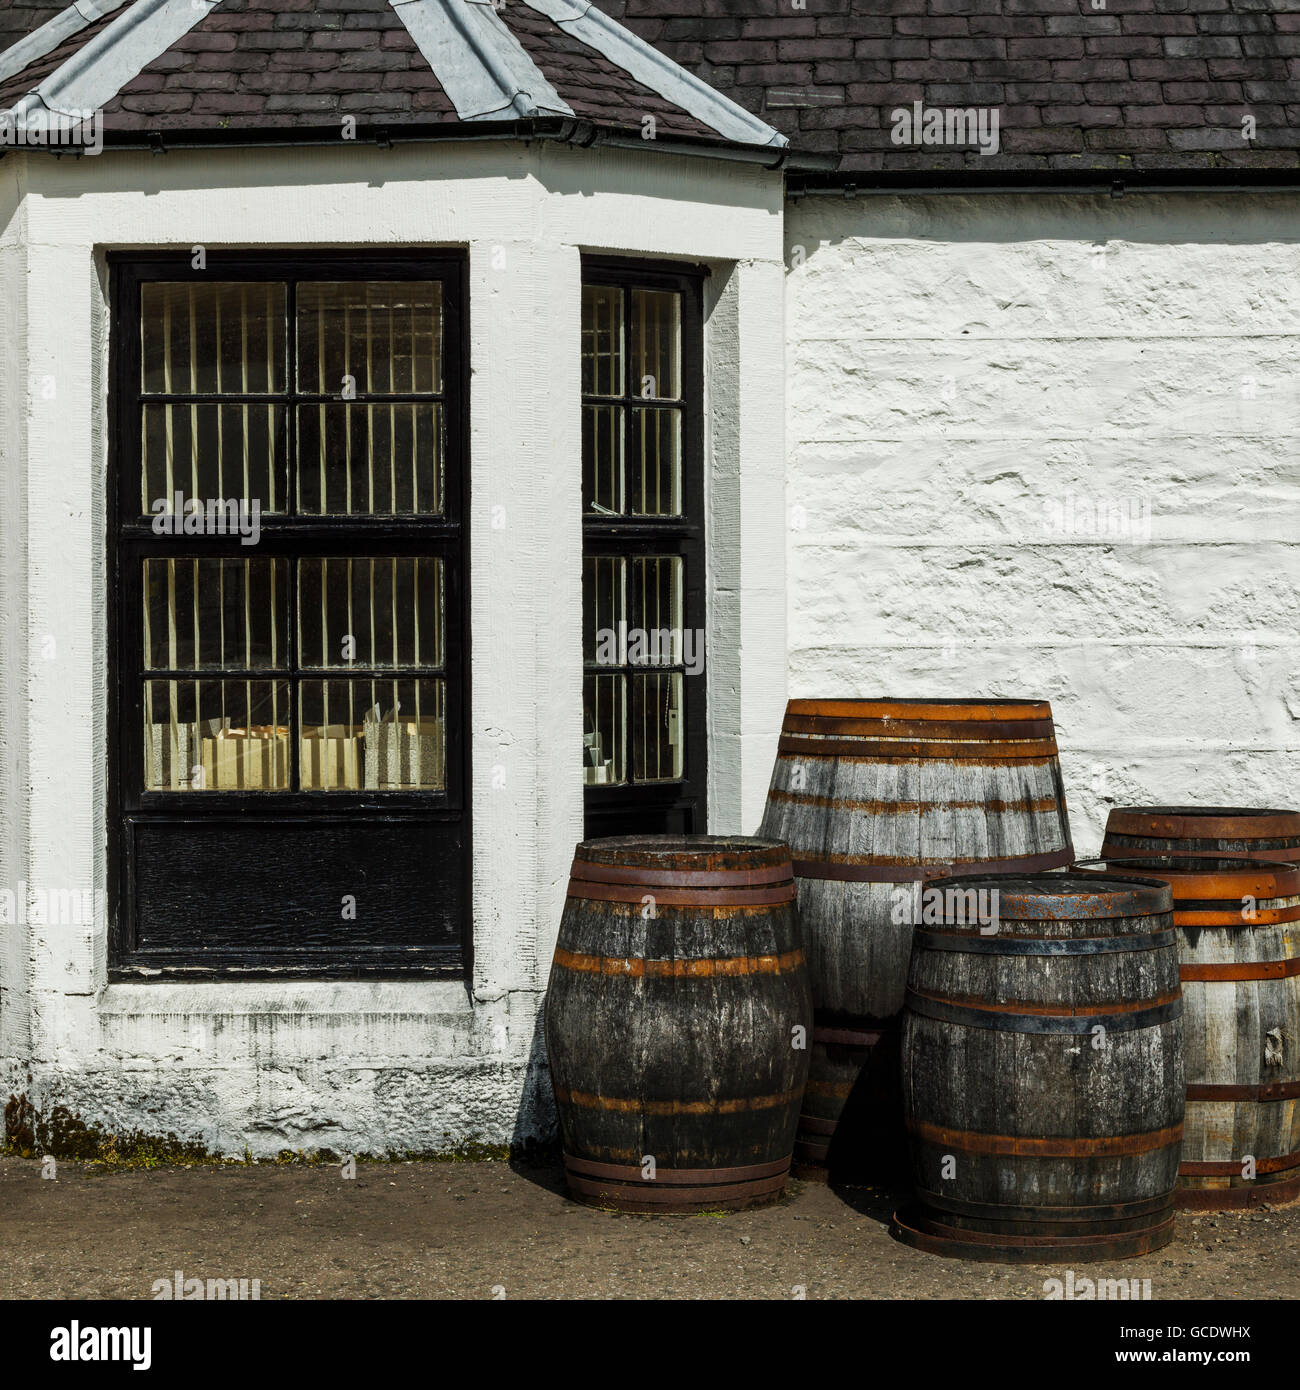 Barrels outside Dalwhinnie distillery; Dalwhinnie, Scotland Stock Photo